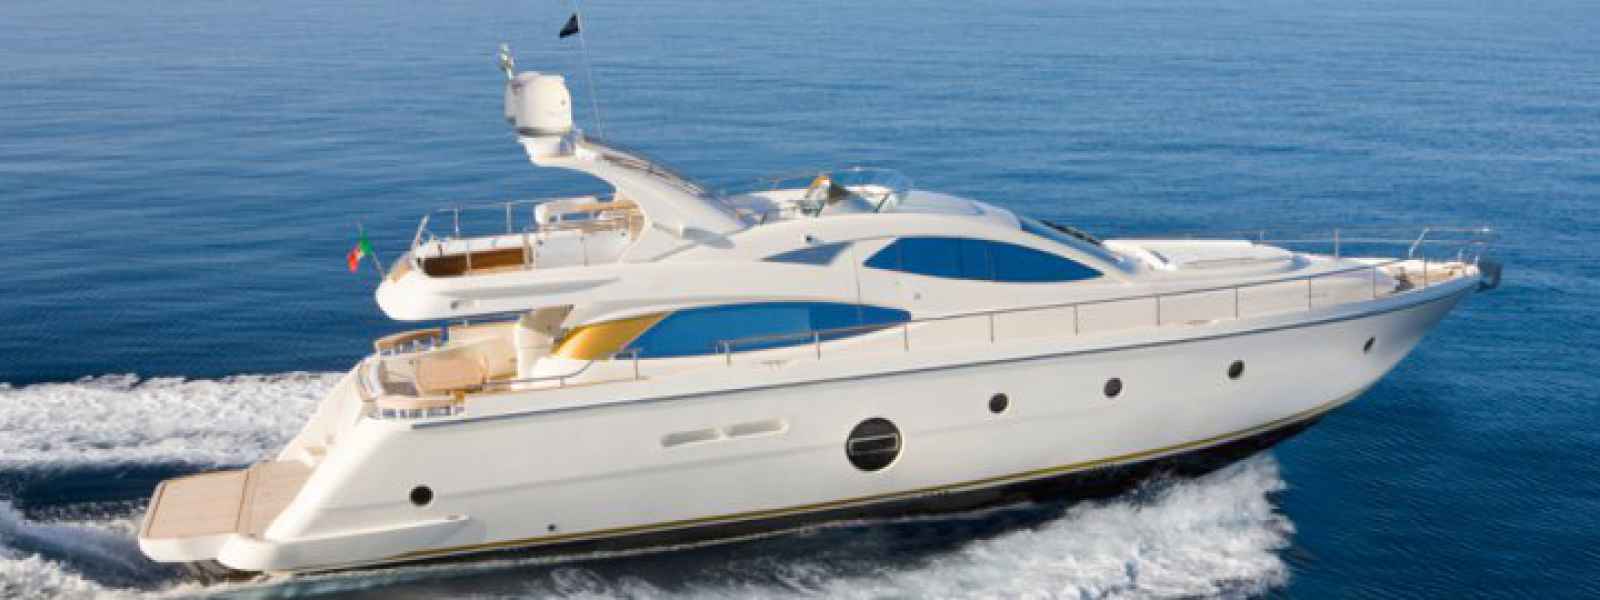 Luxury Yacht Aicon 64 Fly